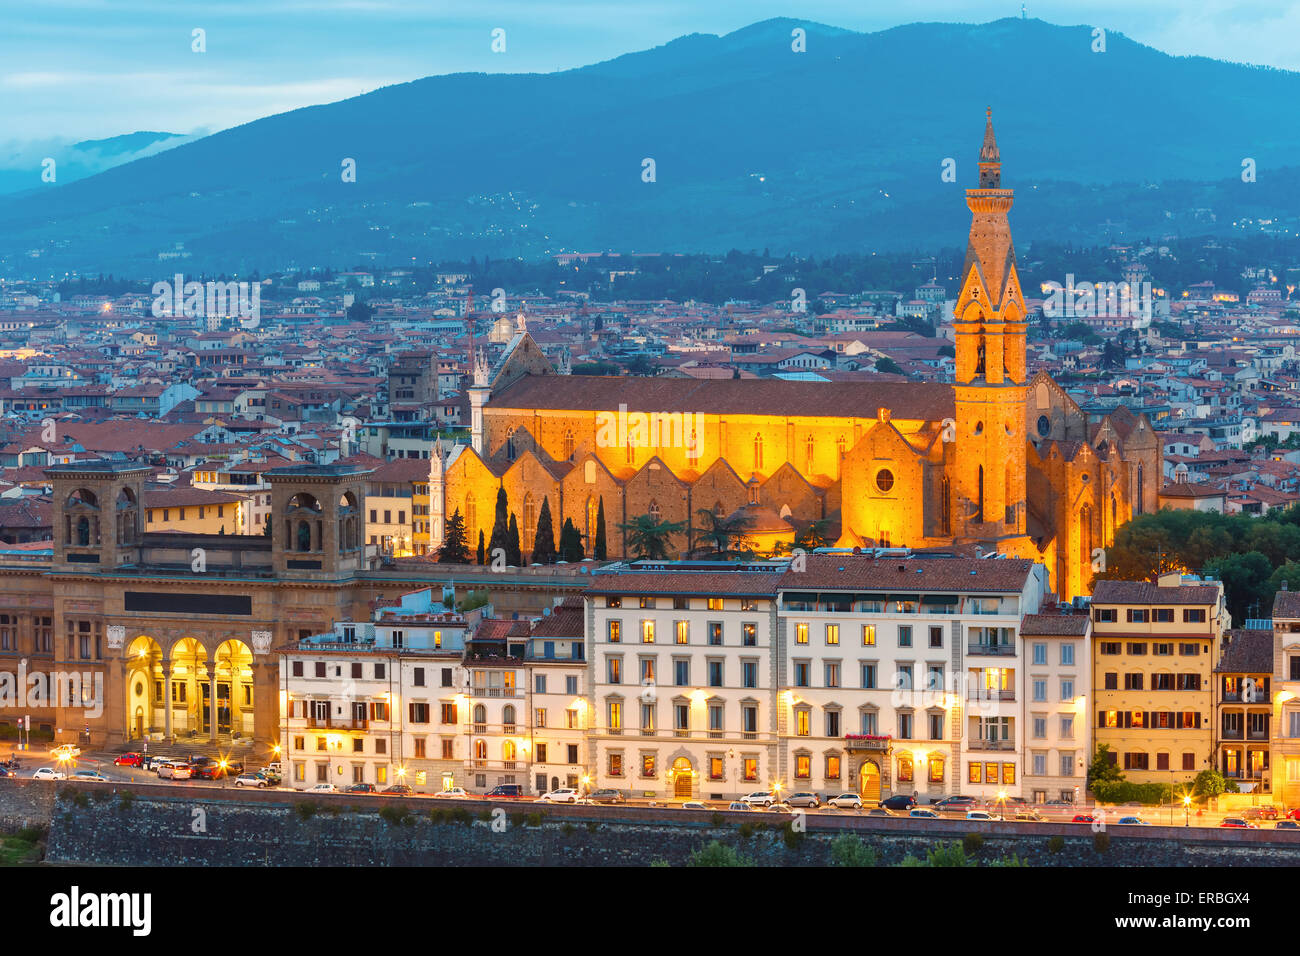 Basilica di Santa Croce in Florence, Italy Stock Photo